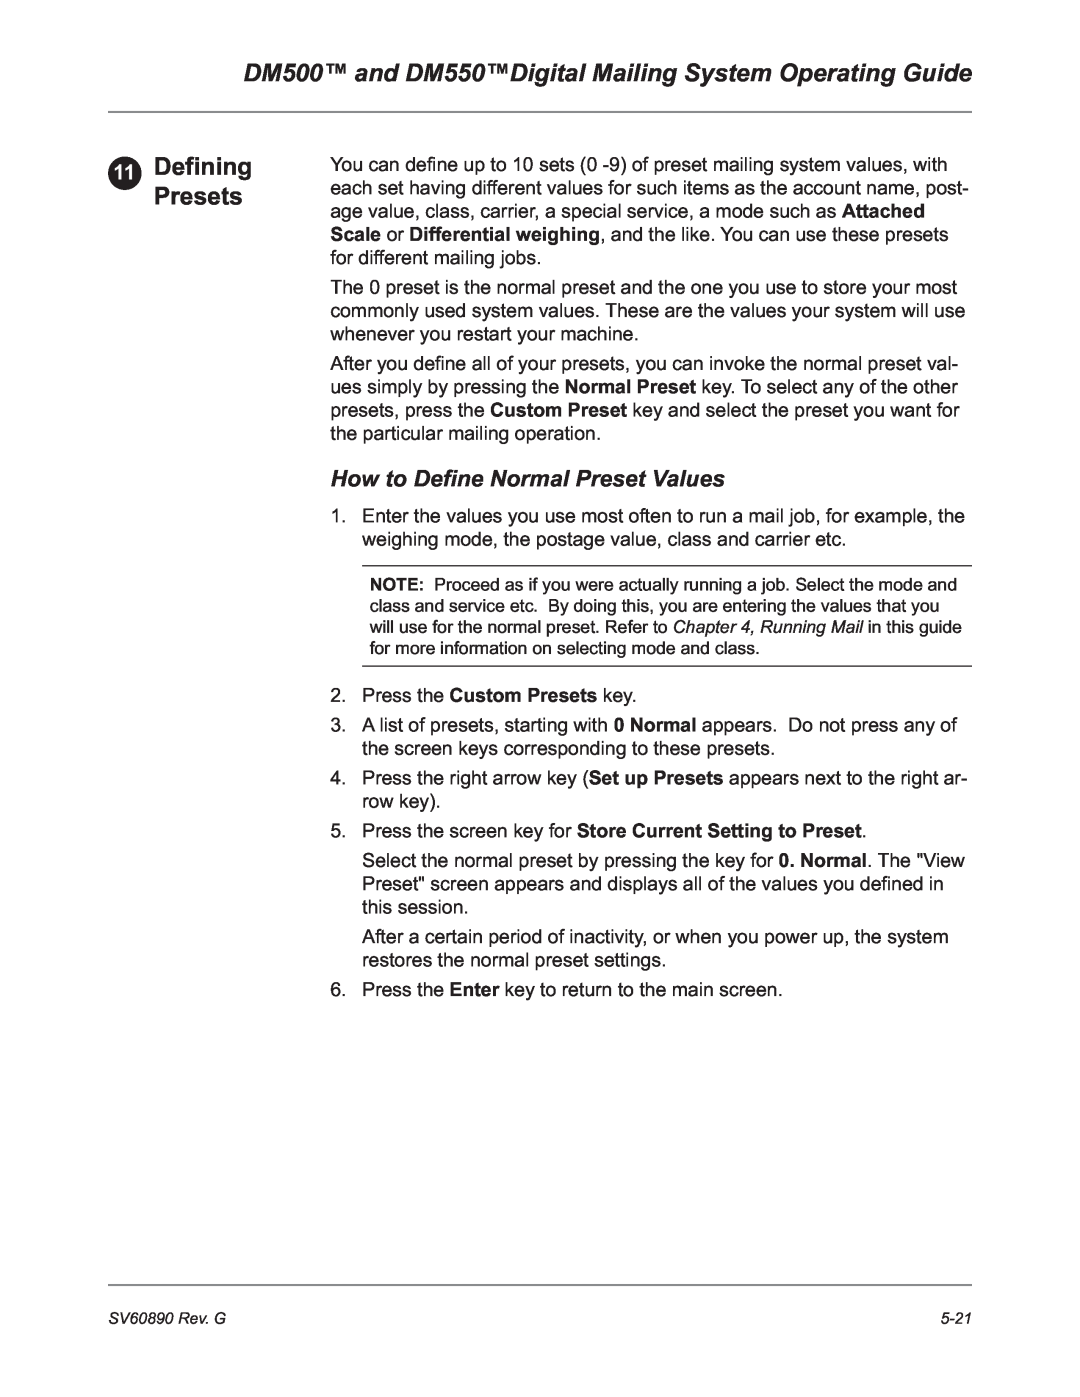 Pitney Bowes DM500, DM550 manual Defining Presets, How to Define Normal Preset Values, Press the Custom Presets key 